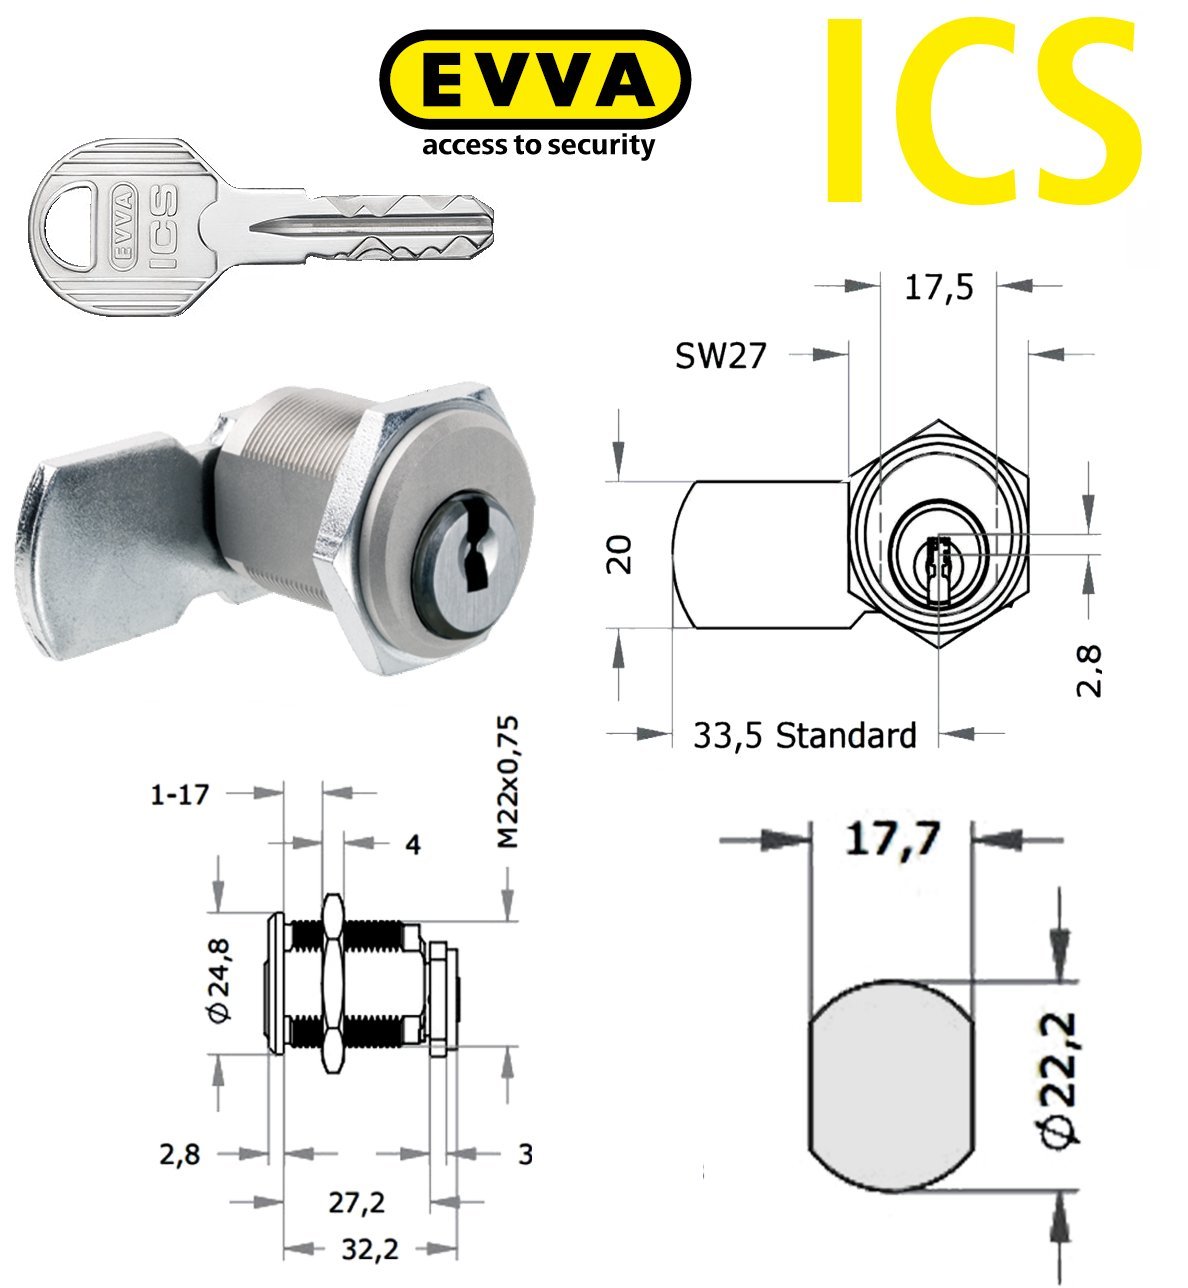 EVVA ICS MB23 Camlock high security with 2 keys